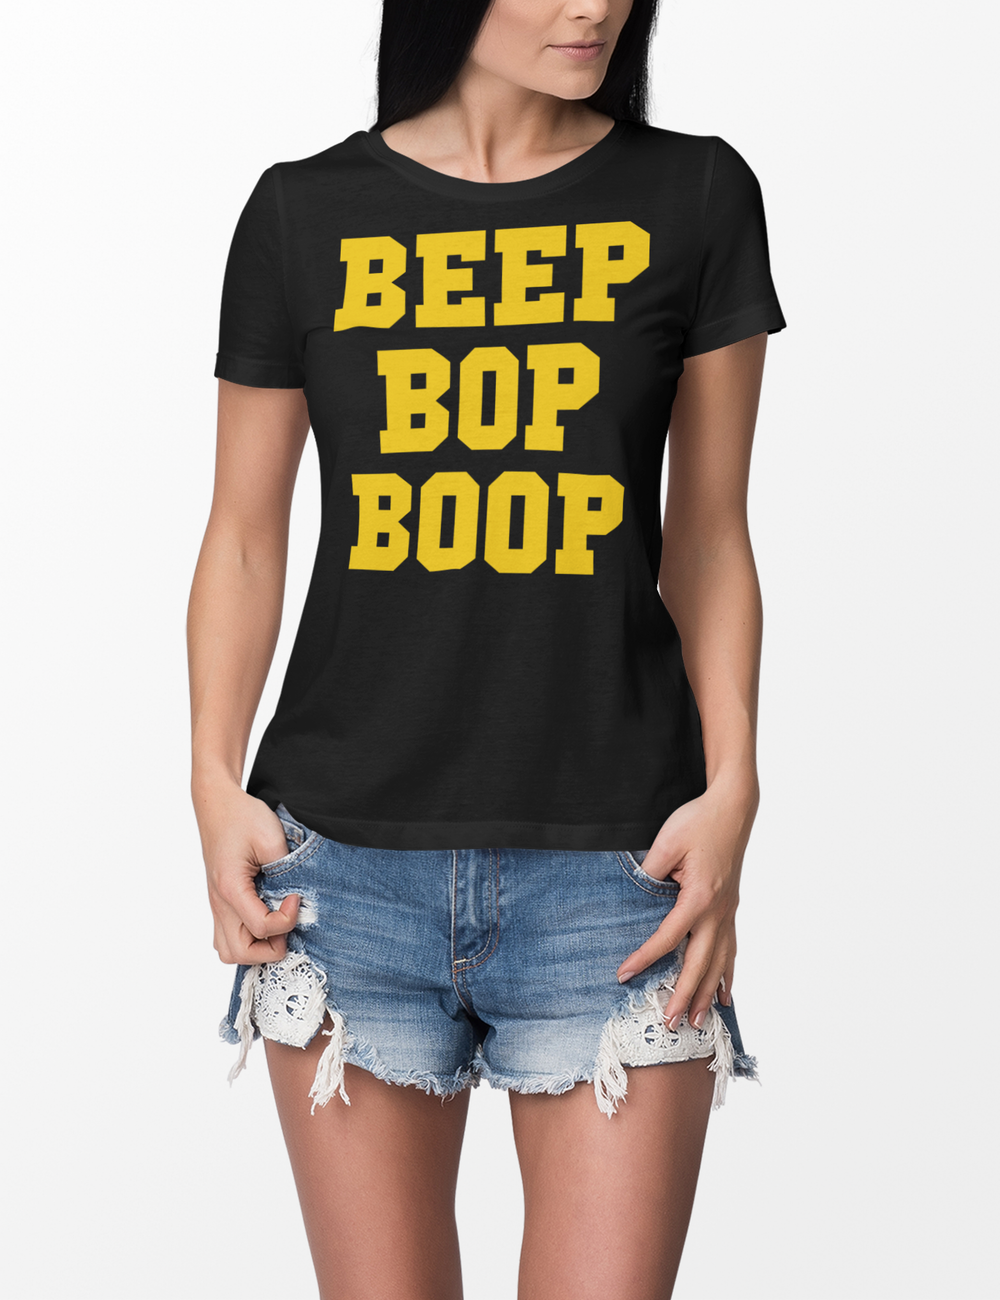 Beep Bop Boop | Women's Style T-Shirt OniTakai